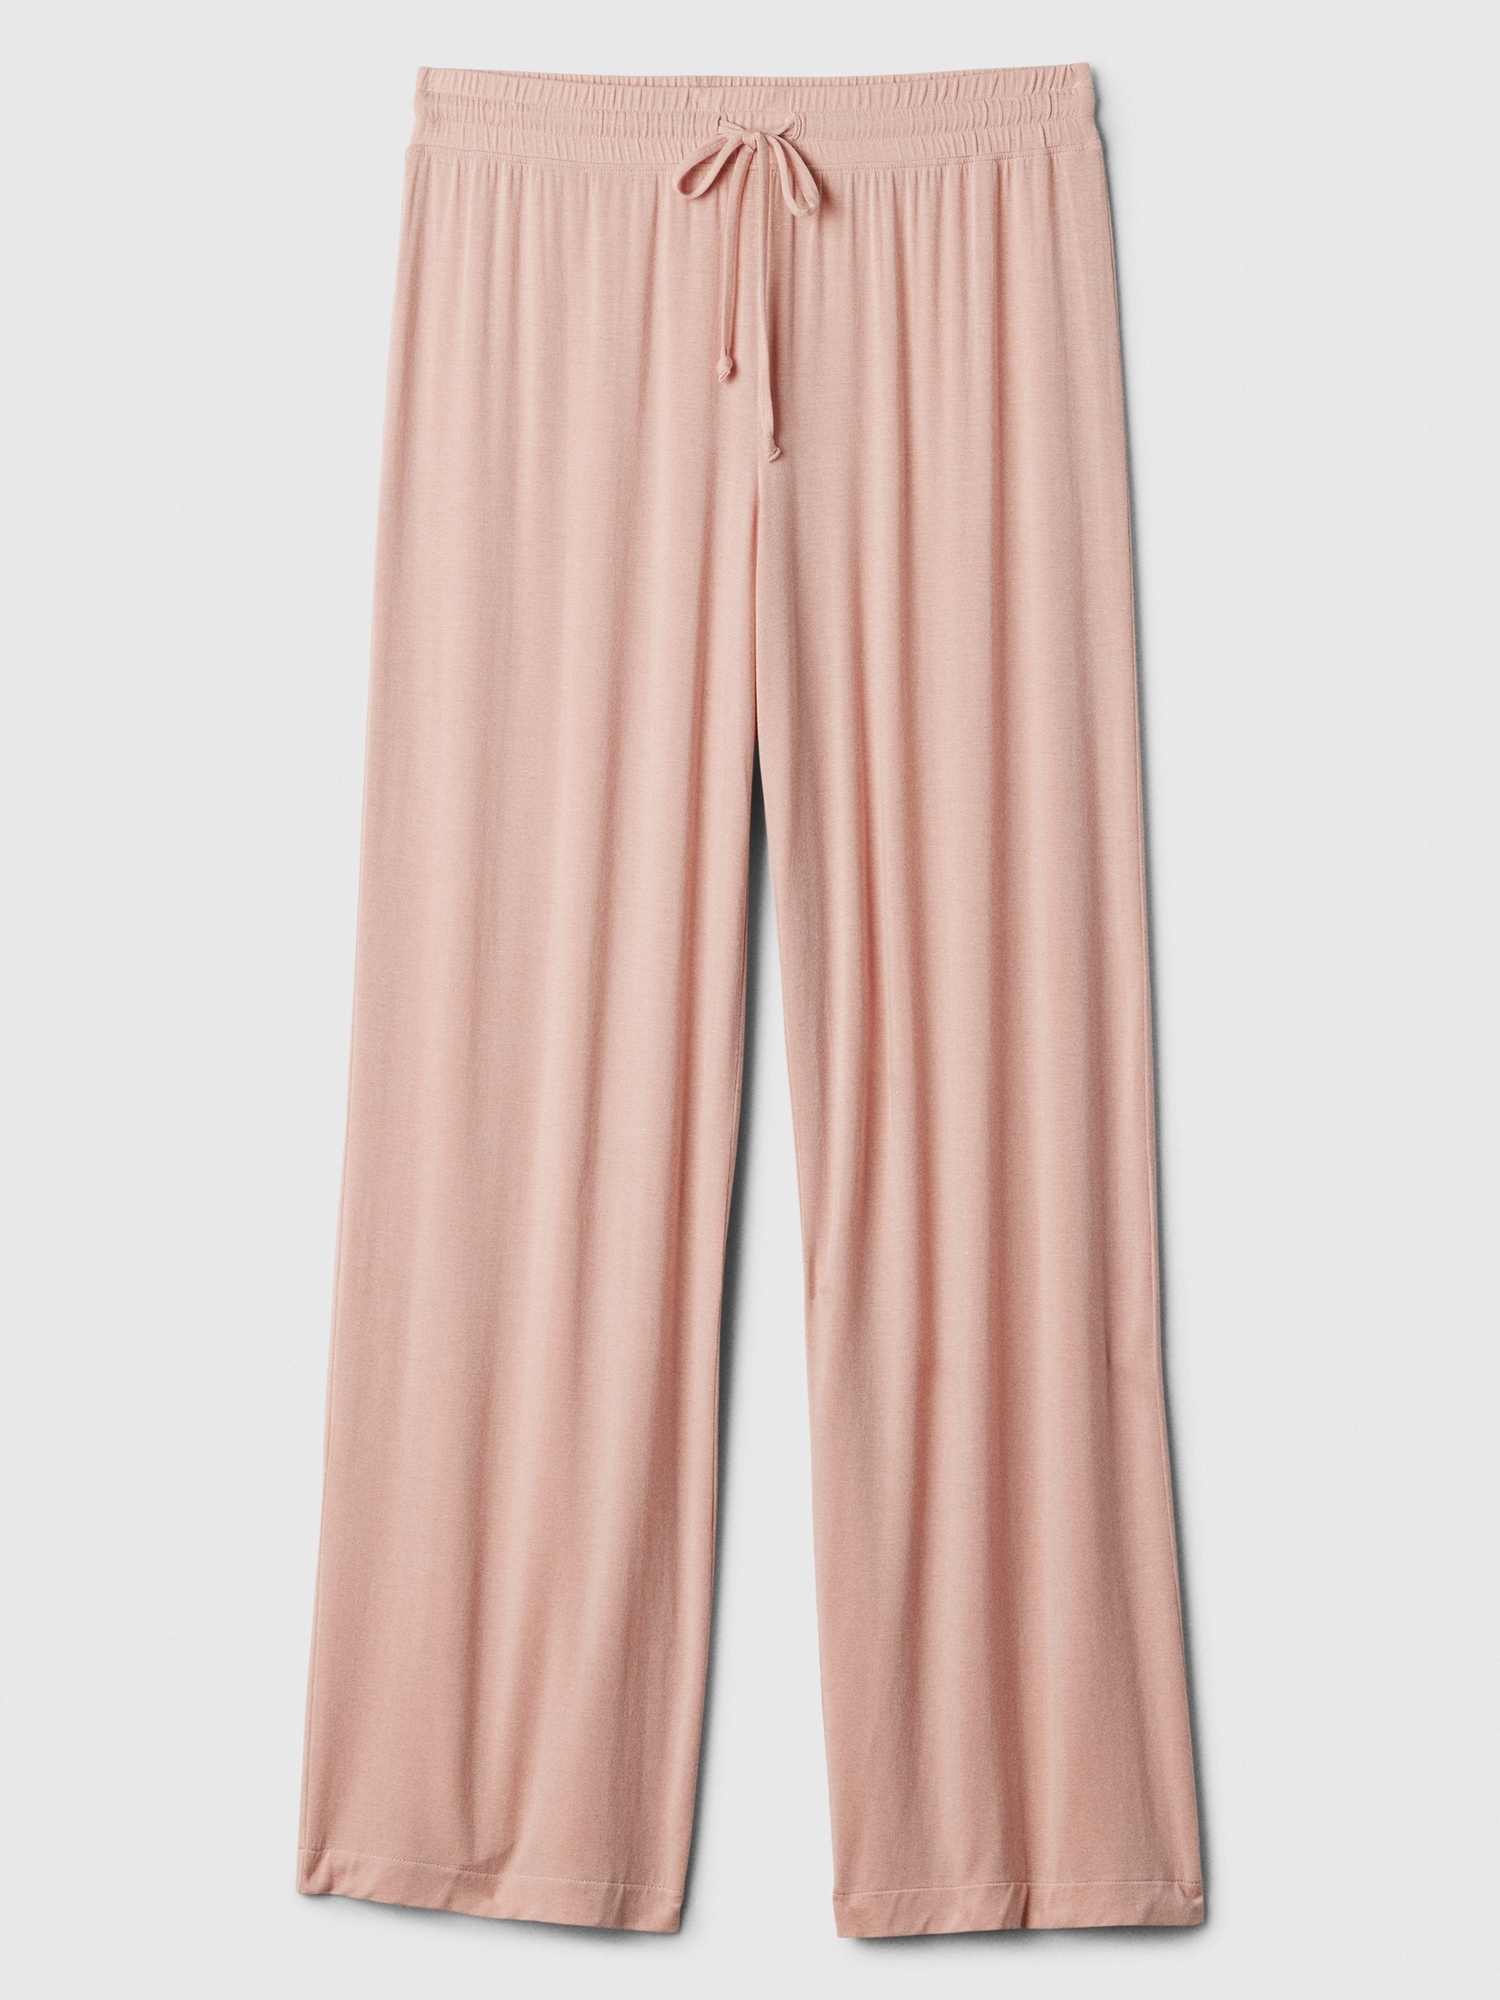 Vero Moda wide leg beach pants in pink | ASOS